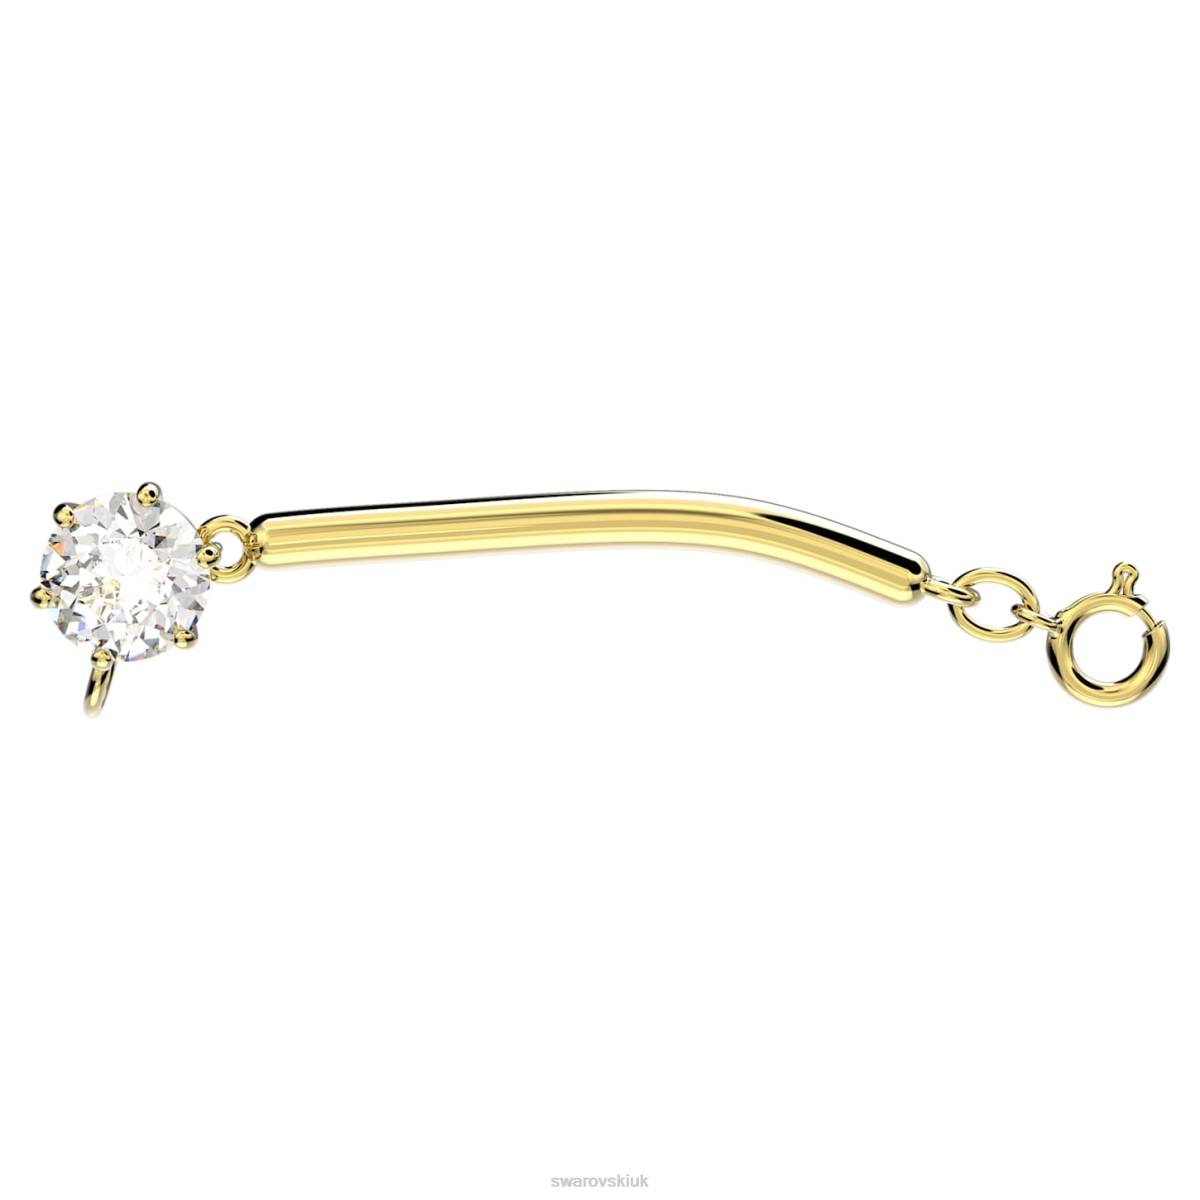 Jewelry Swarovski Constella extender Round cut, White, Gold-tone plated 48JX1127